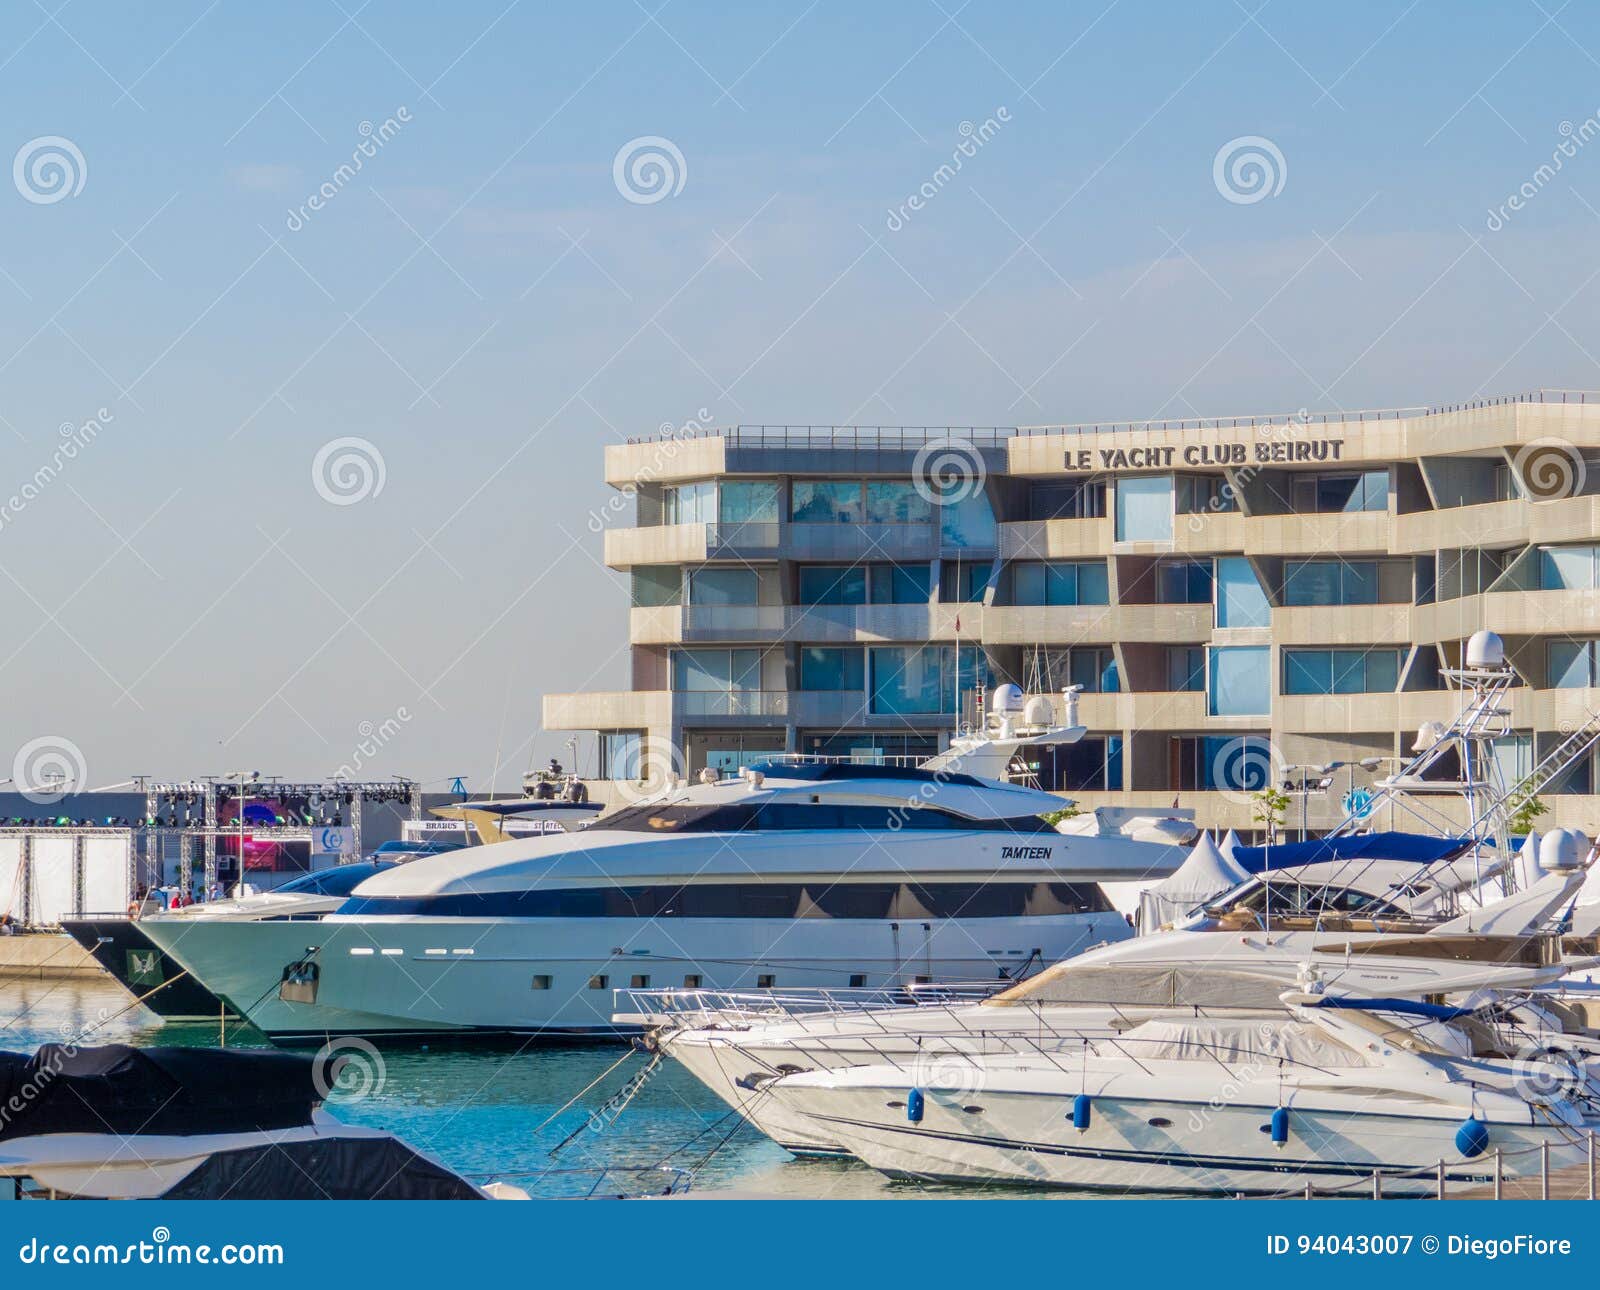 yacht club zaitunay bay